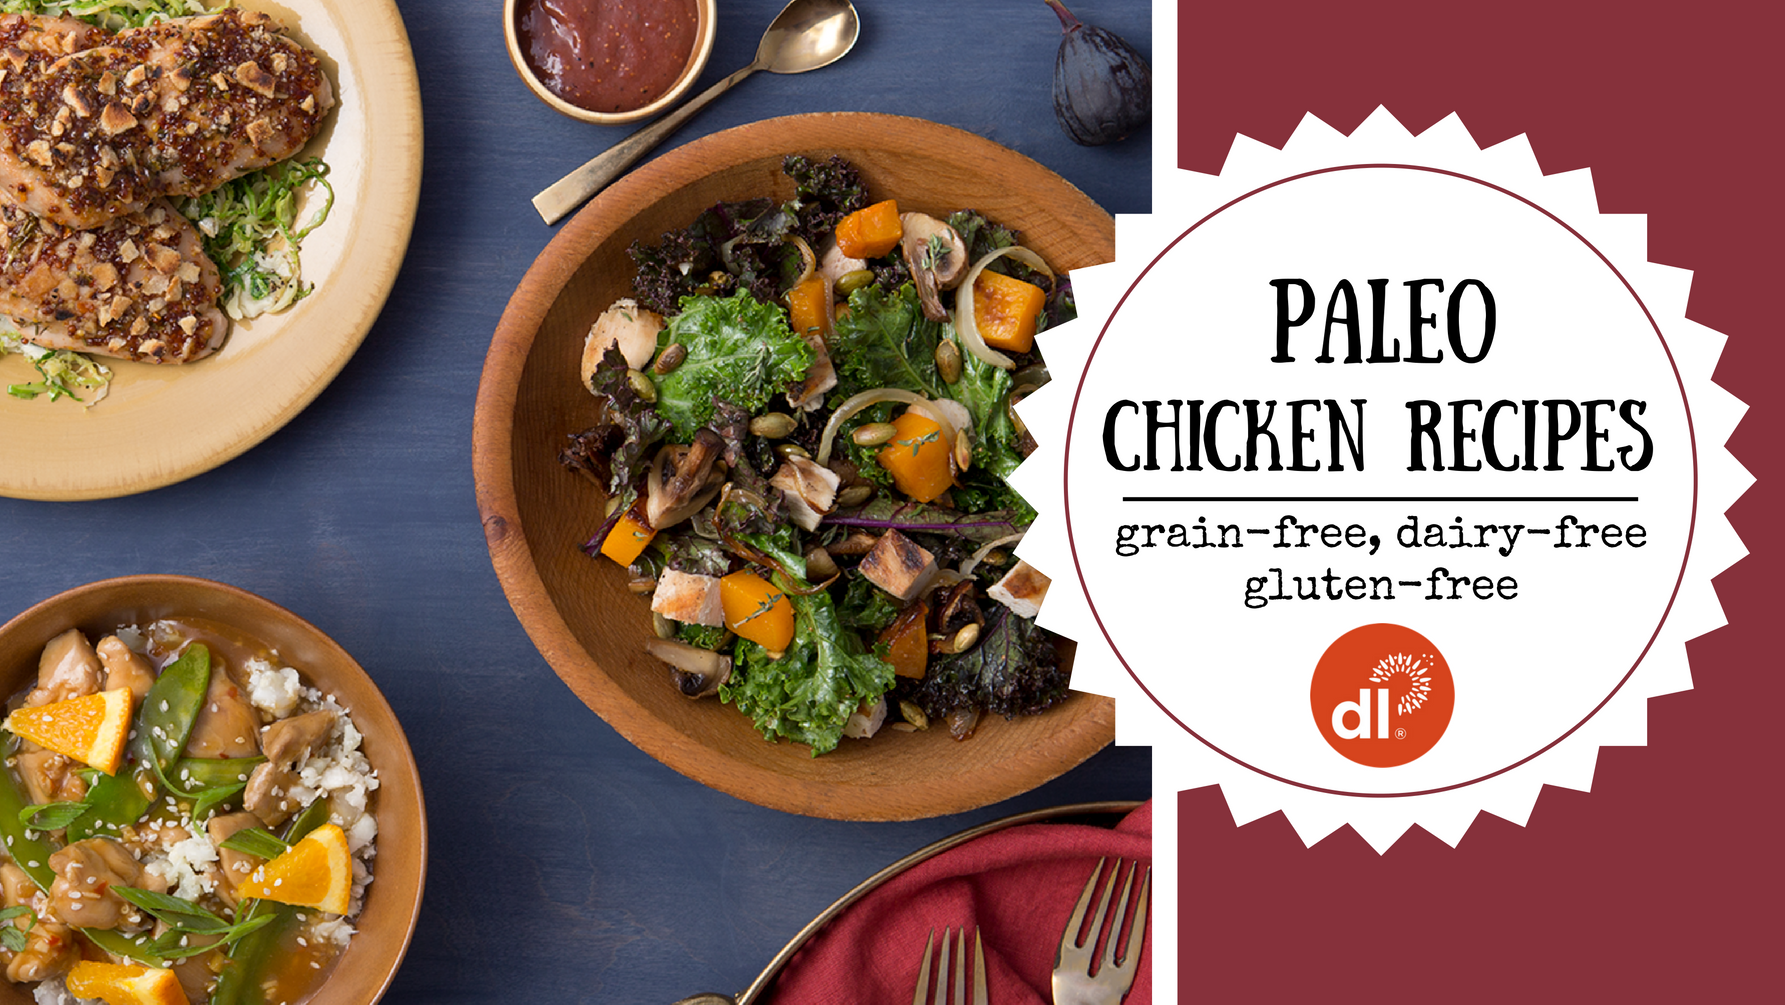 Winner, winner! It’s paleo chicken dinner!